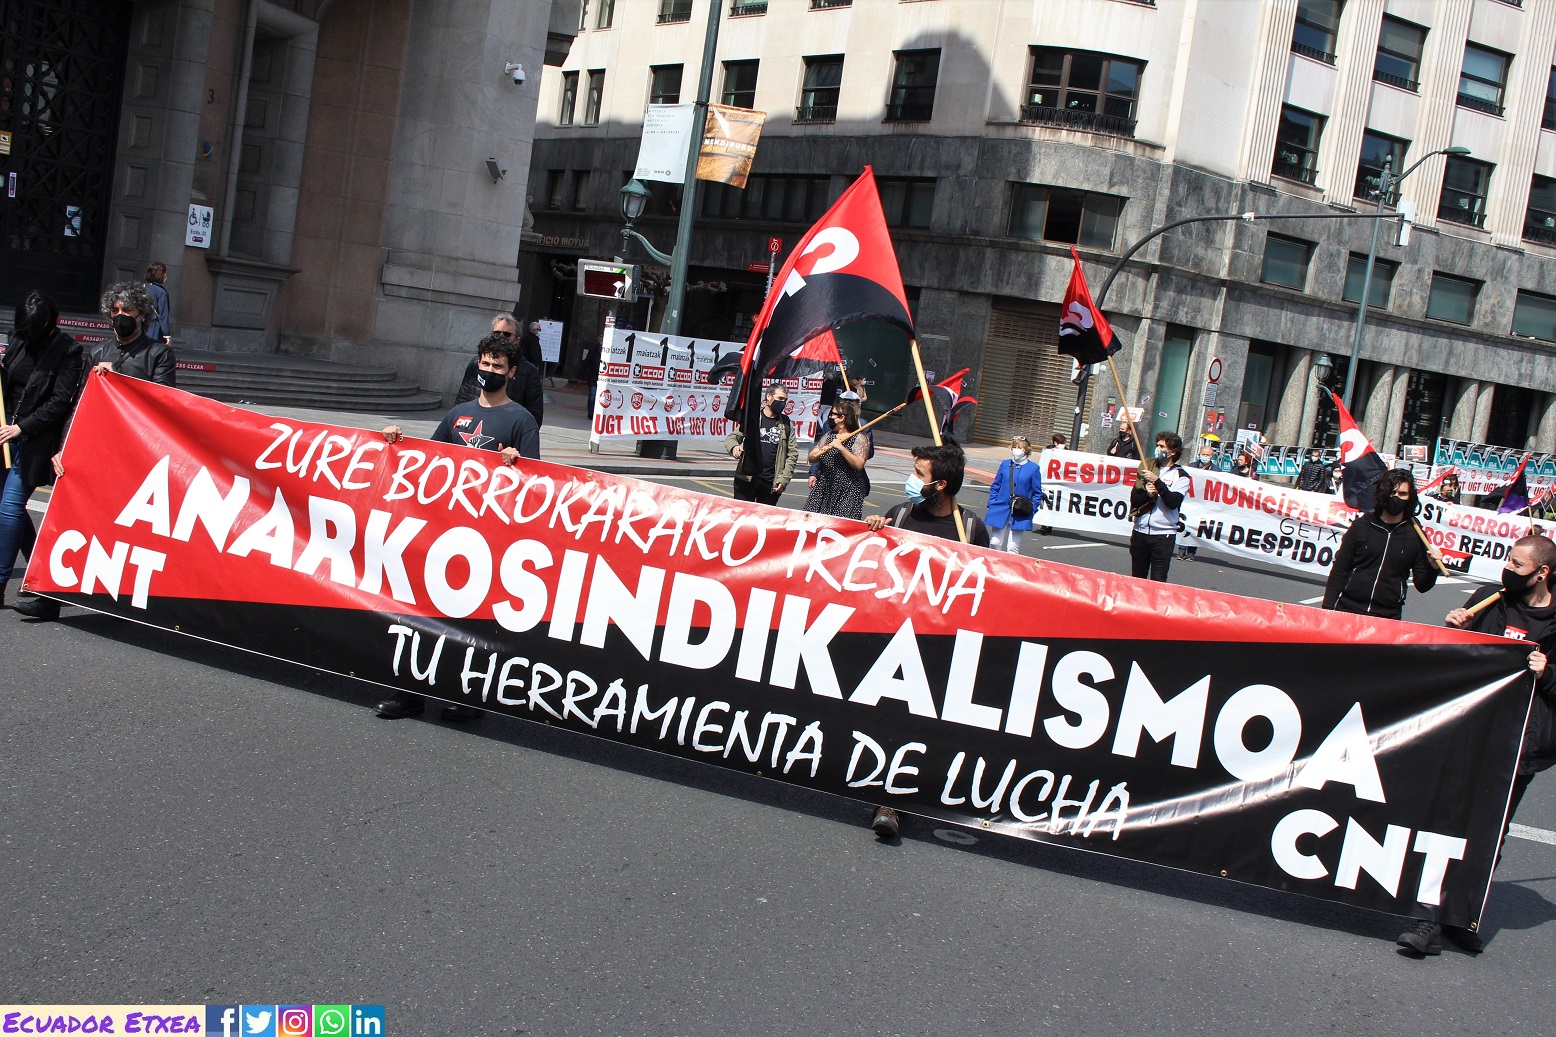 1mayo-primero-mayo-CNT-sindicato-bilbao-vasco-anarco-dignidad-clase-trabajadora